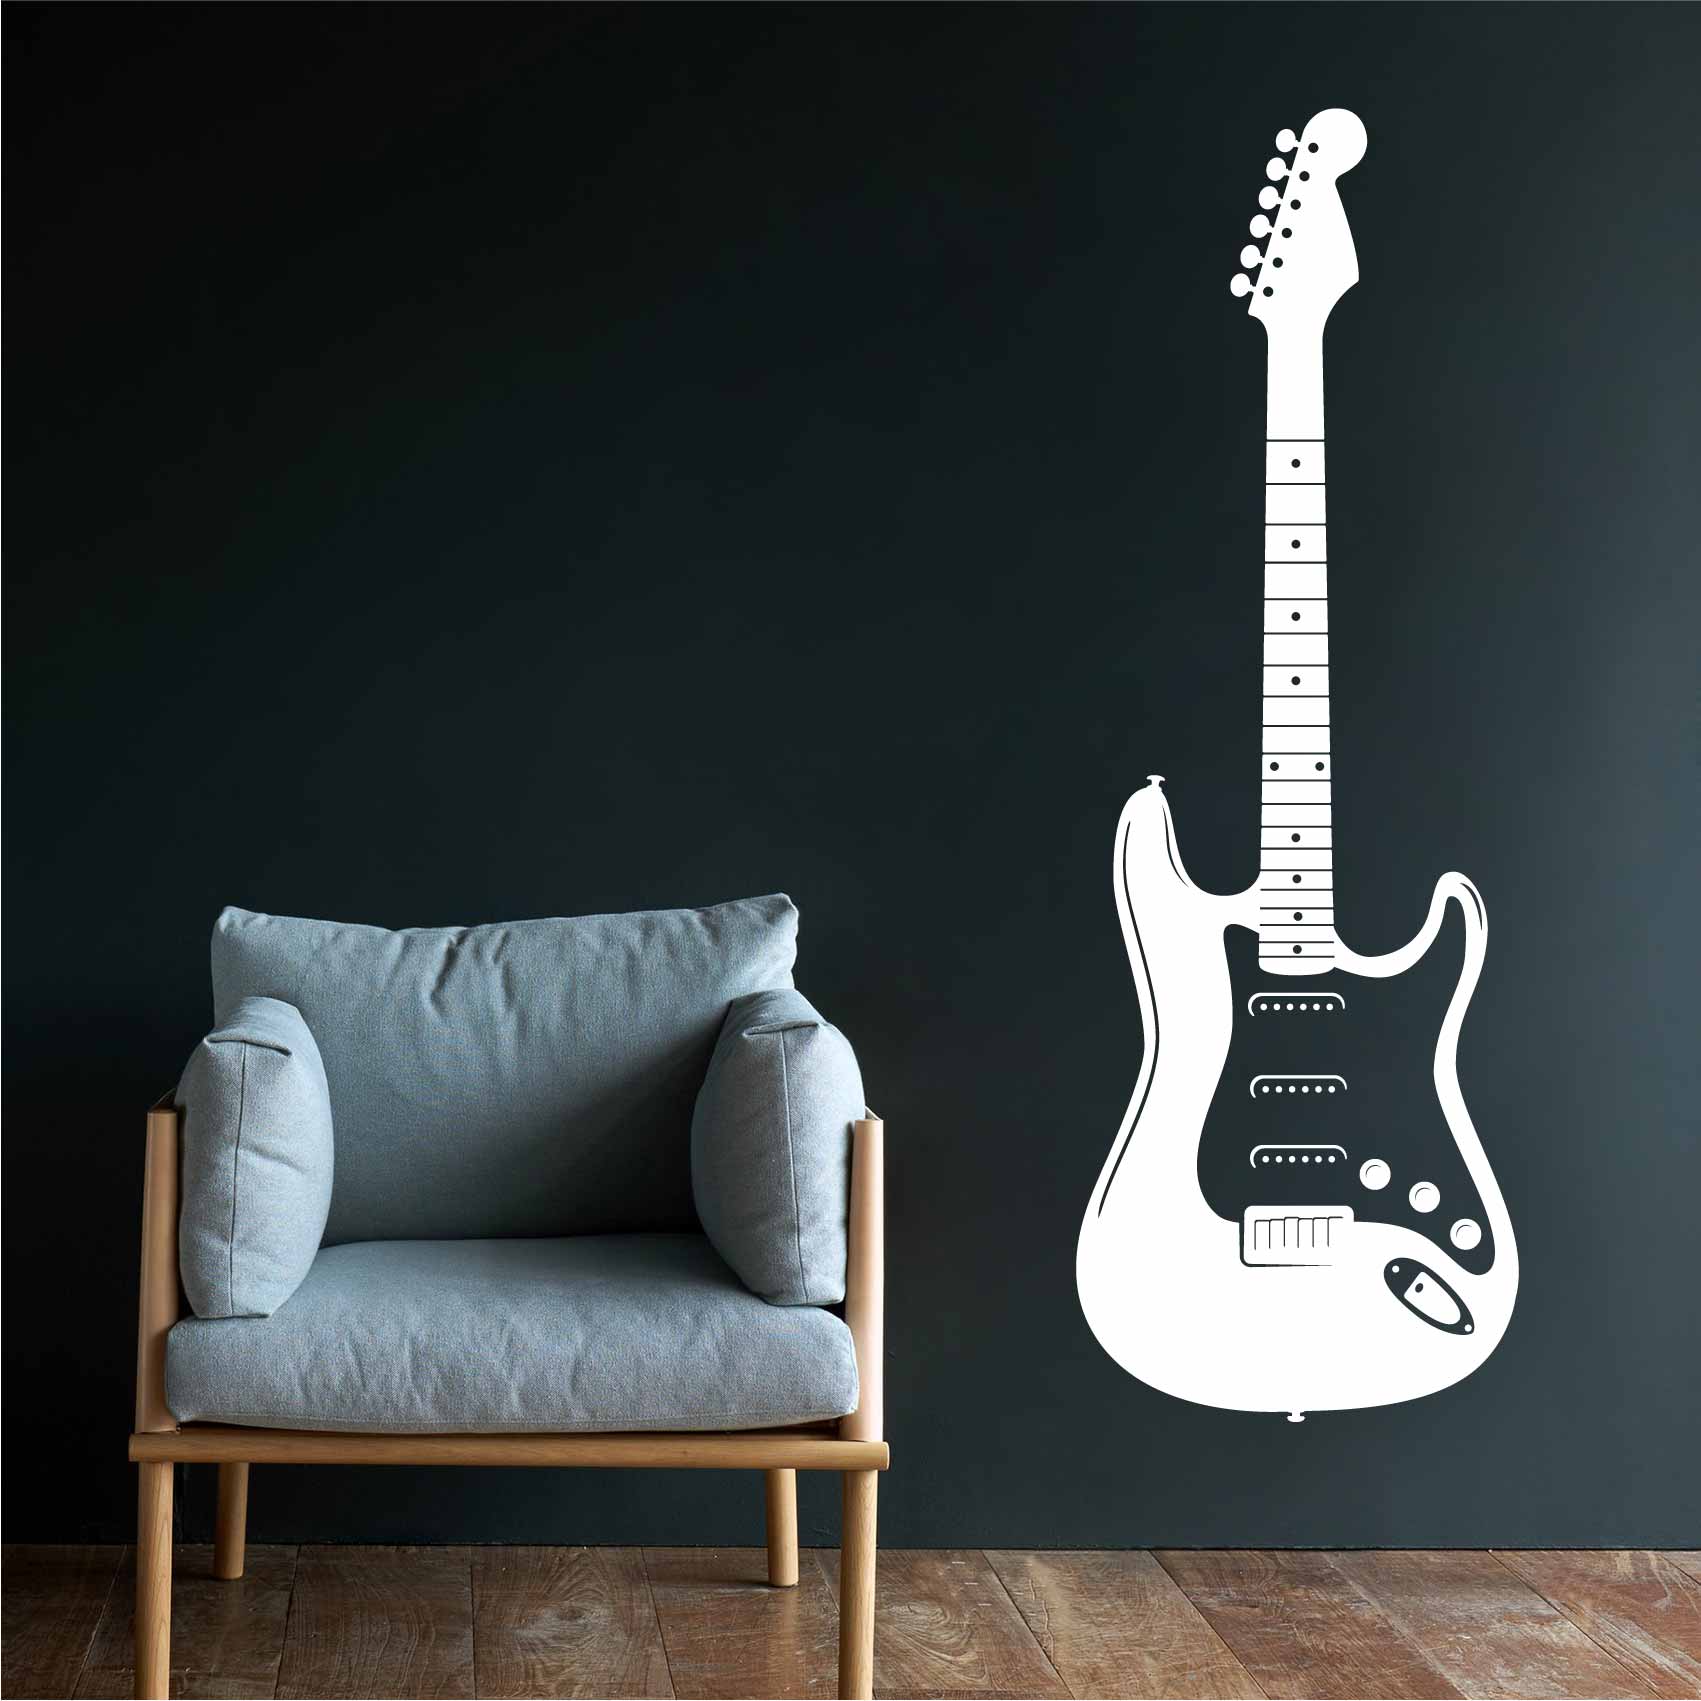 stickers-guitare-electrique-ref74musique-stickers-muraux-musique-autocollant-deco-salon-chambre-music-sticker-mural-musique